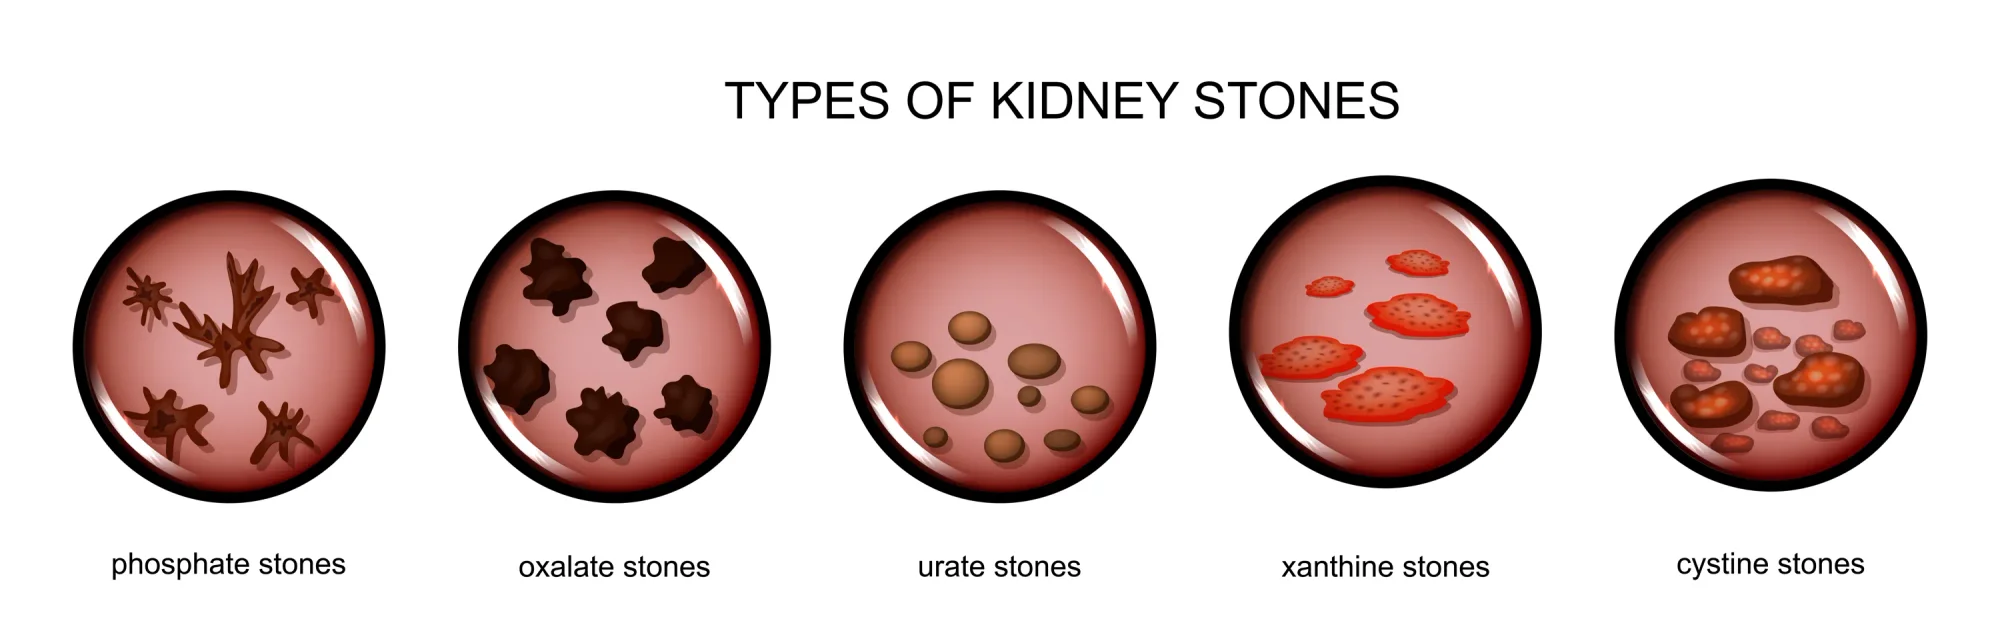 Vector illustration of types of kidney stones.